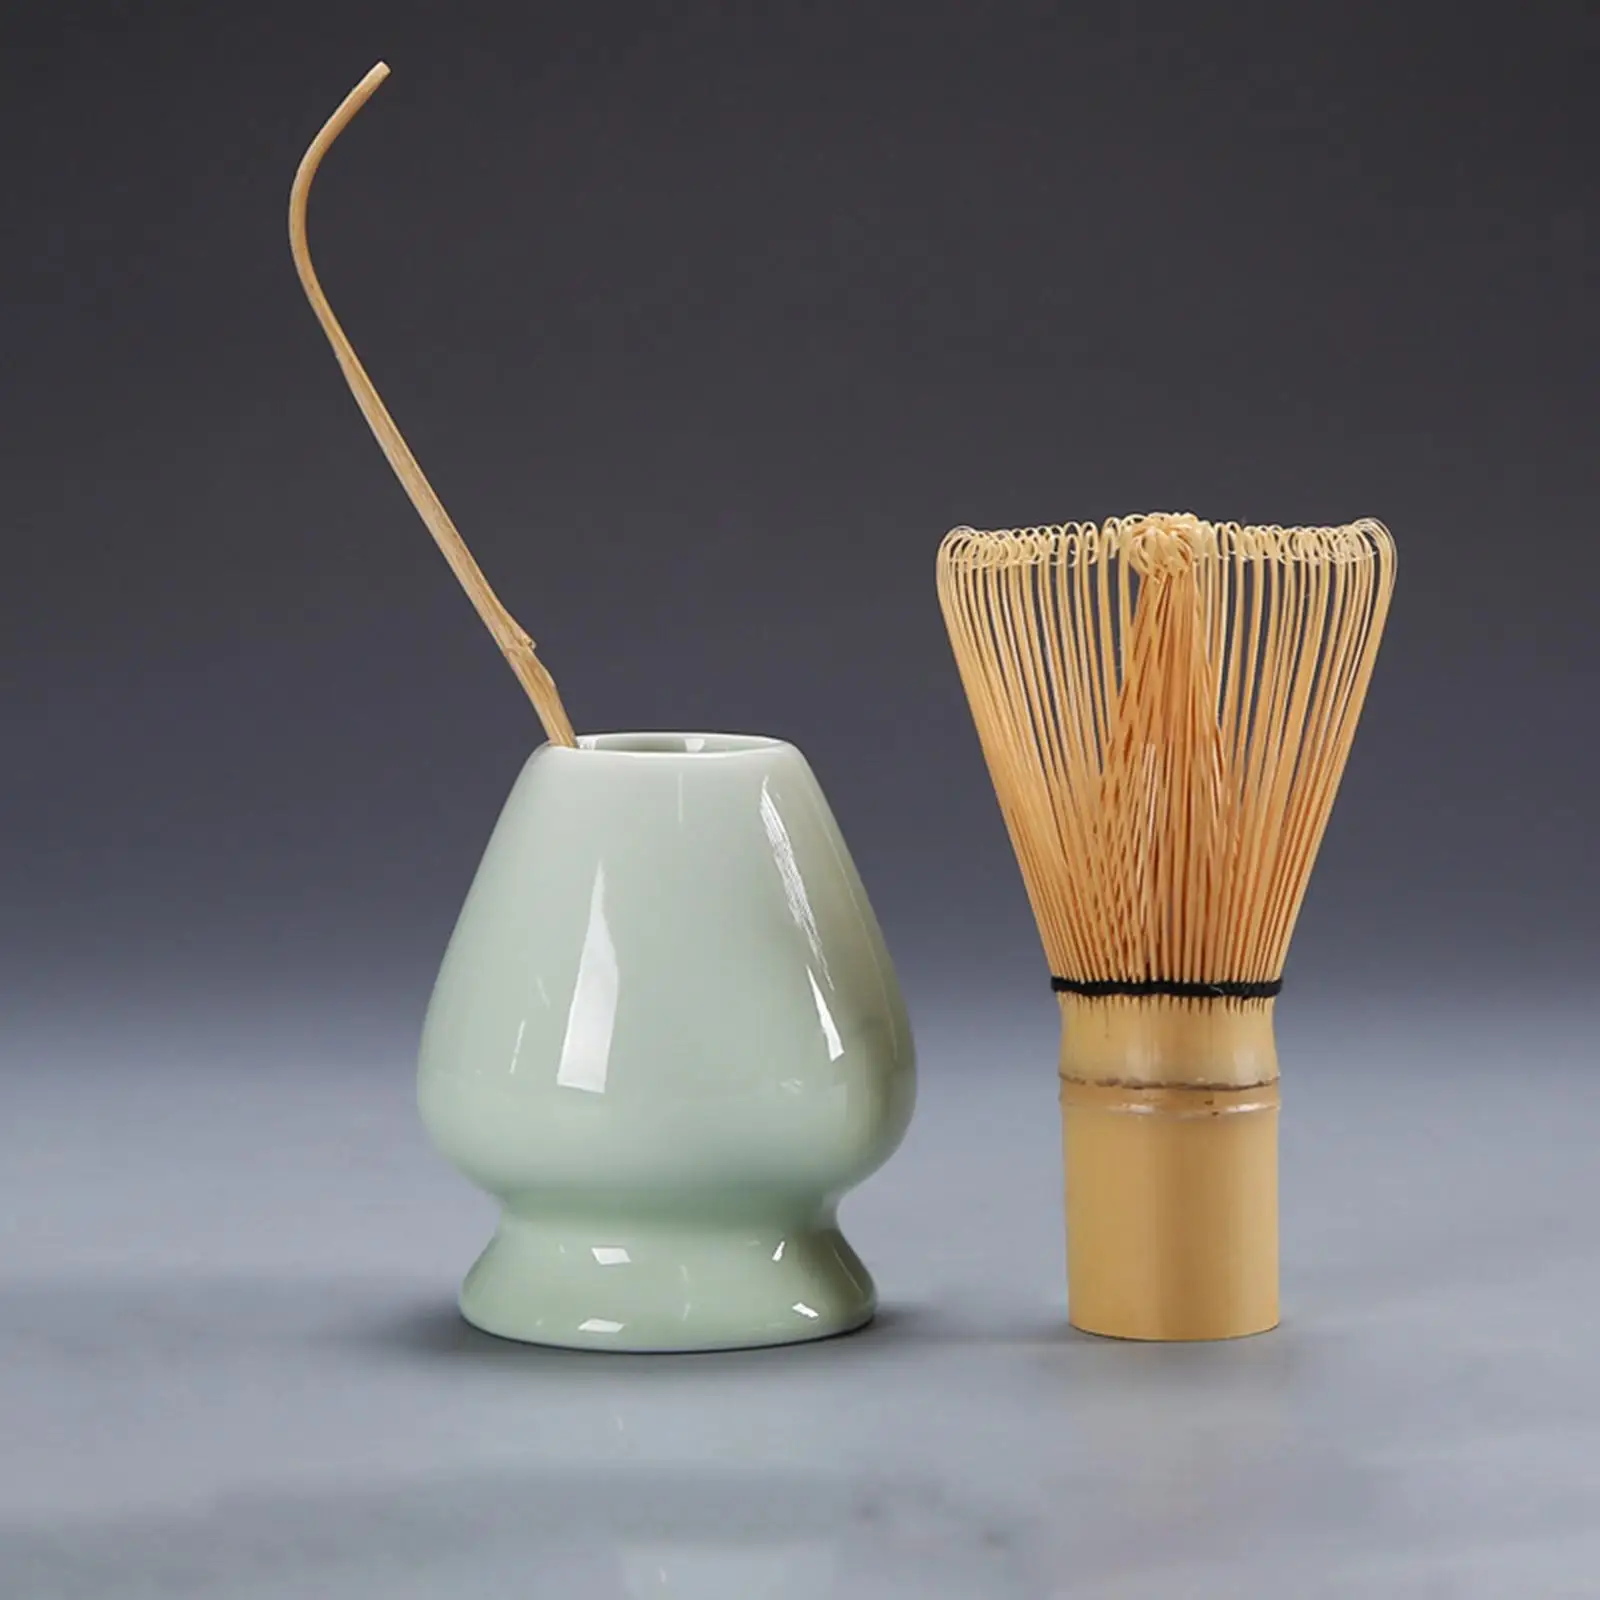 Japanese Style Matcha Set Matcha Ceremony Kit for Tea Room Matcha Whisk Ceramic Whisk Holder Bamboo Whisk Traditional Scoop